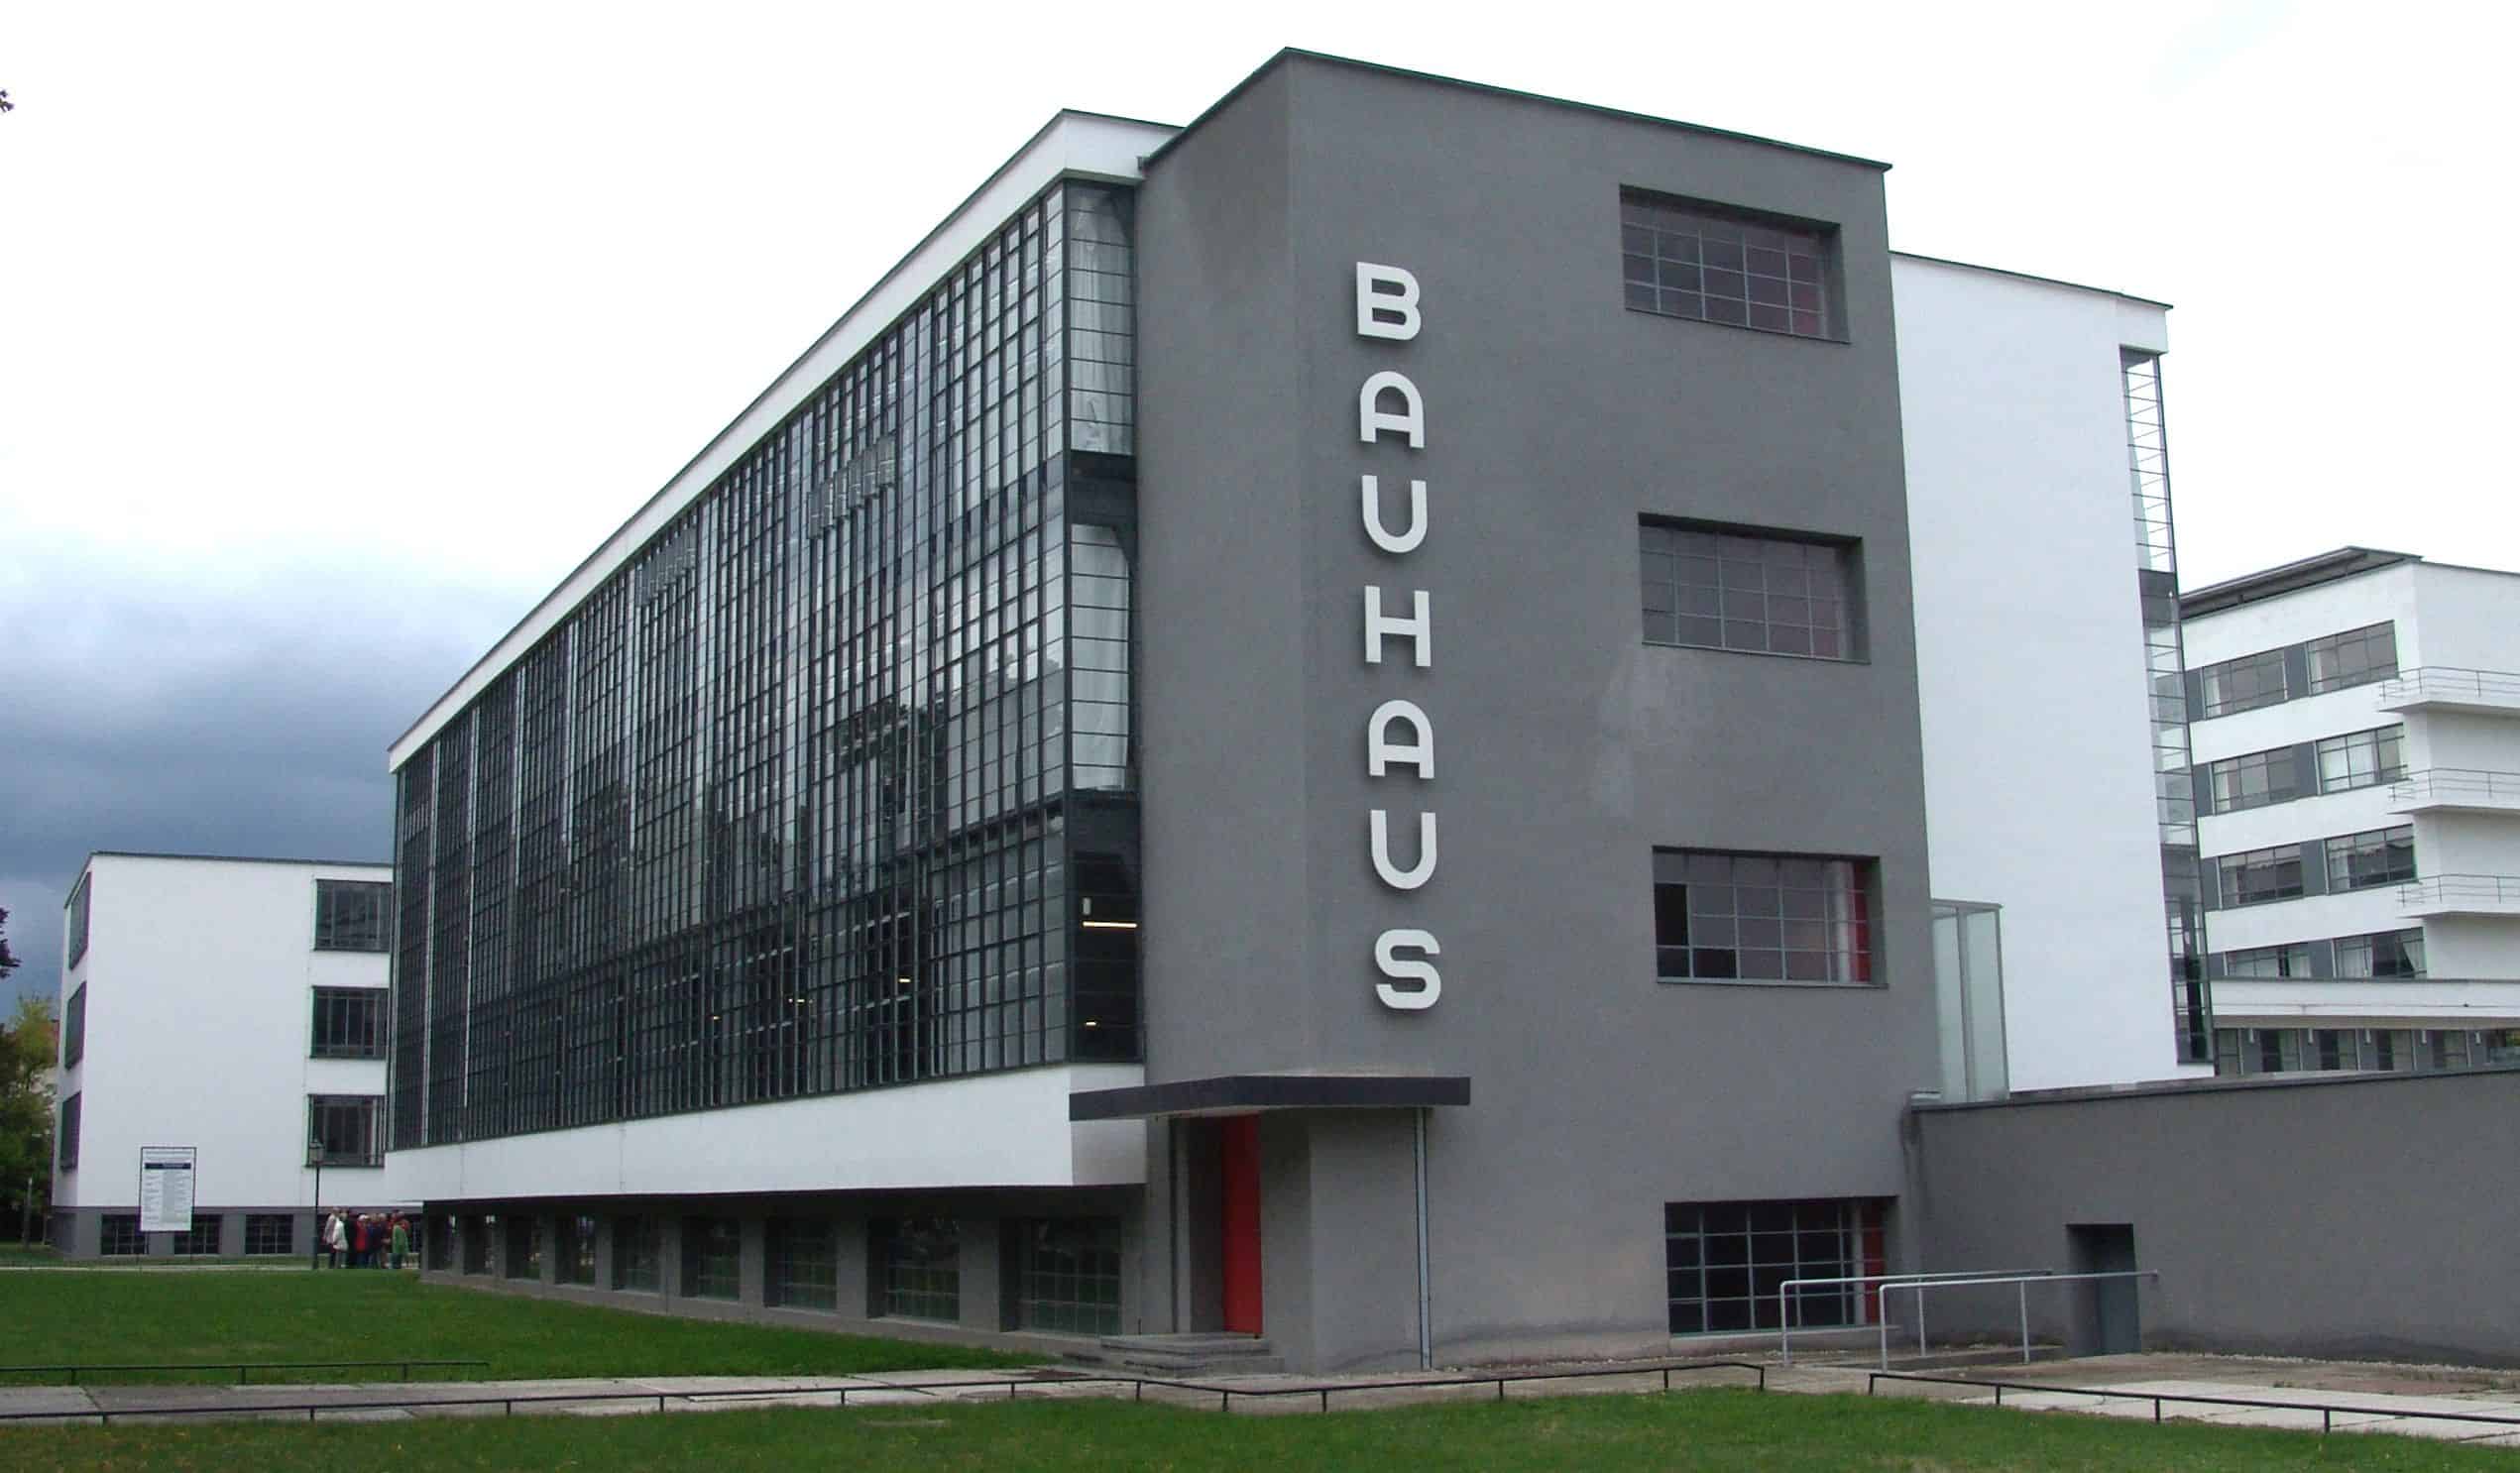 Edificio de la Bauhaus, Dessau, Alemania